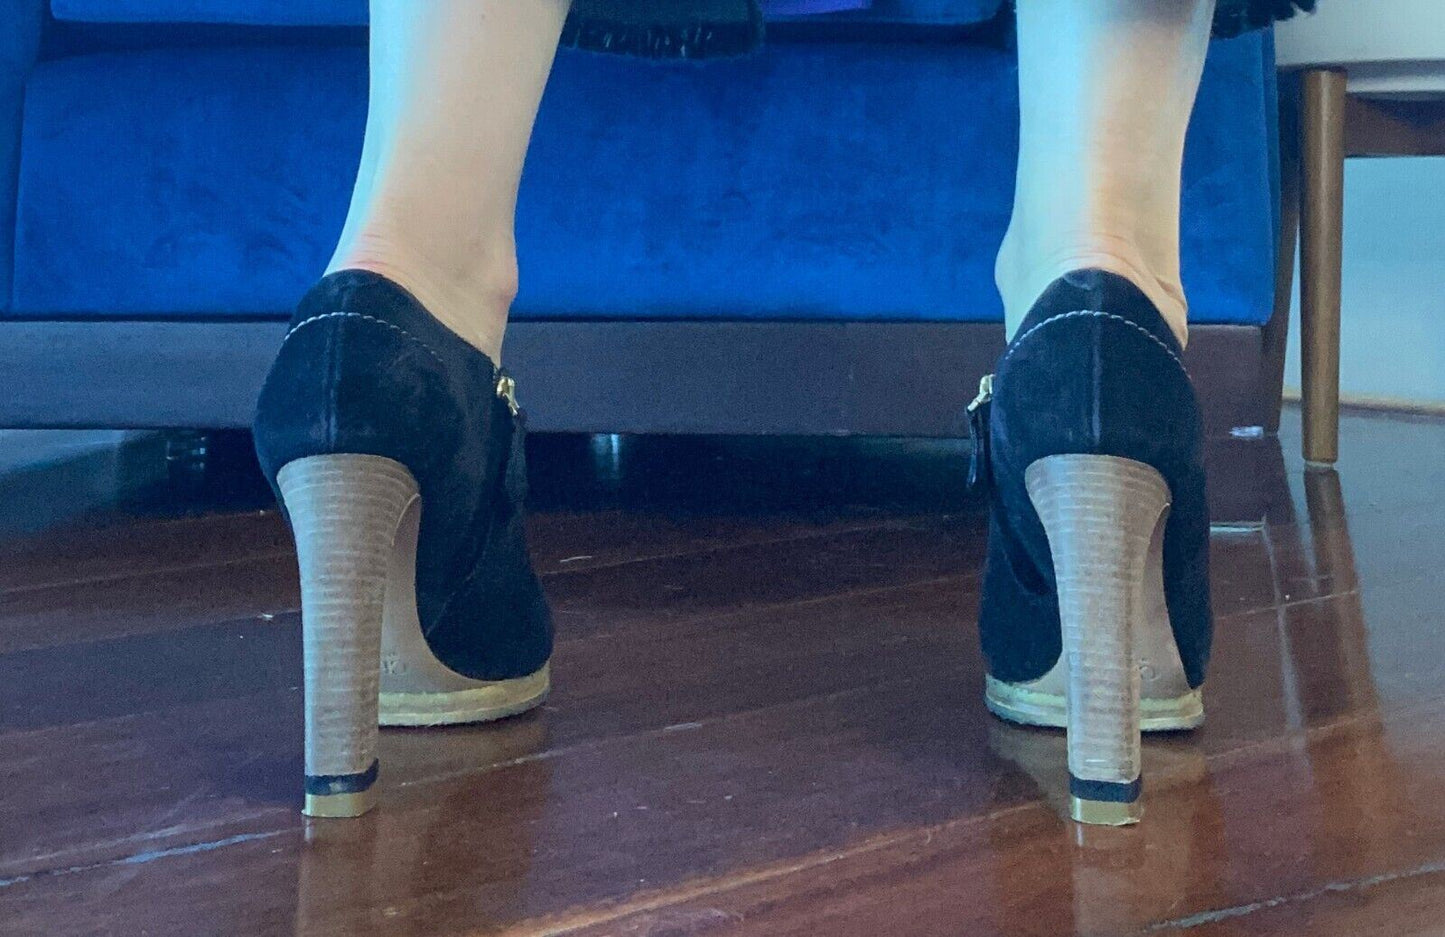 Chloe Ankle Boots | Suede Bootie, Platform, Heels, Black, Size 39, WORN ONCE